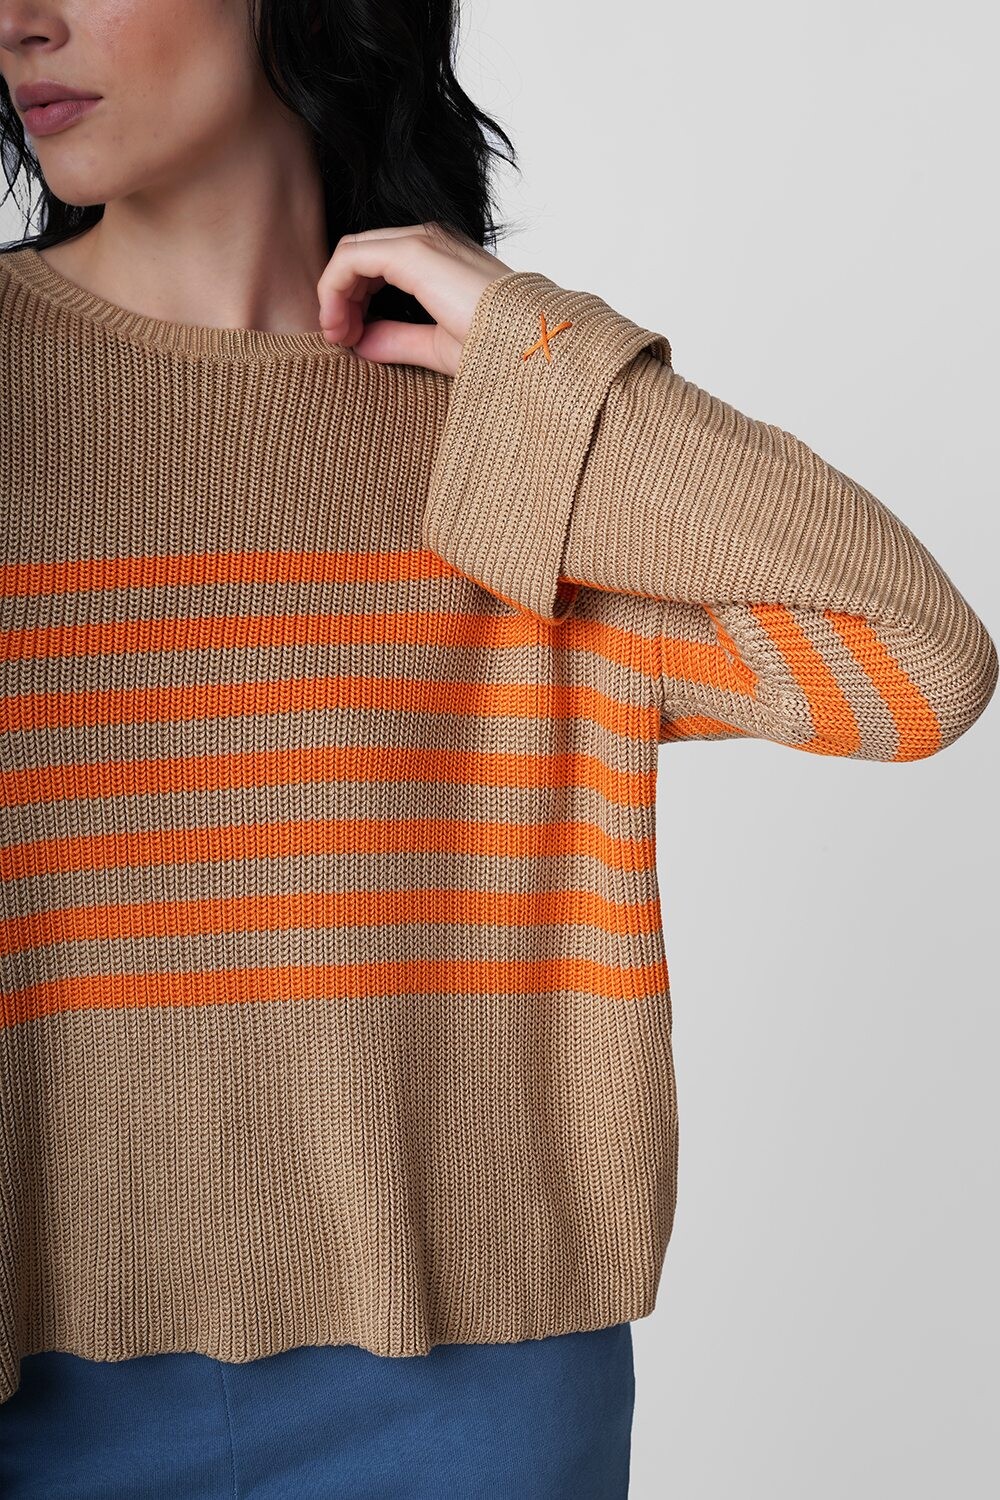 Sweater Justino Estampado 2